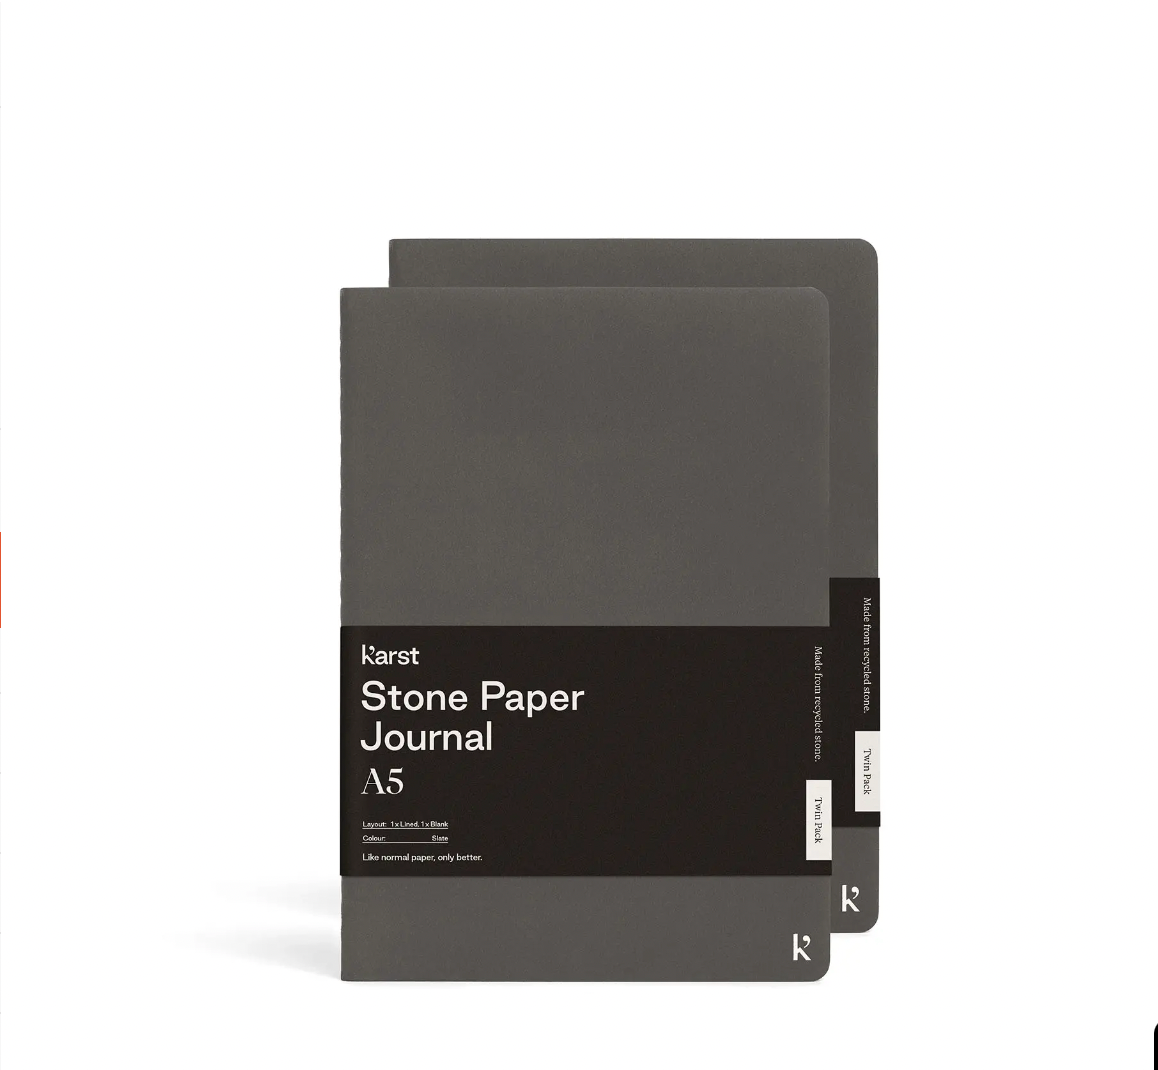 Karst - Papierkollektion Stein - A6 Pocket Journal